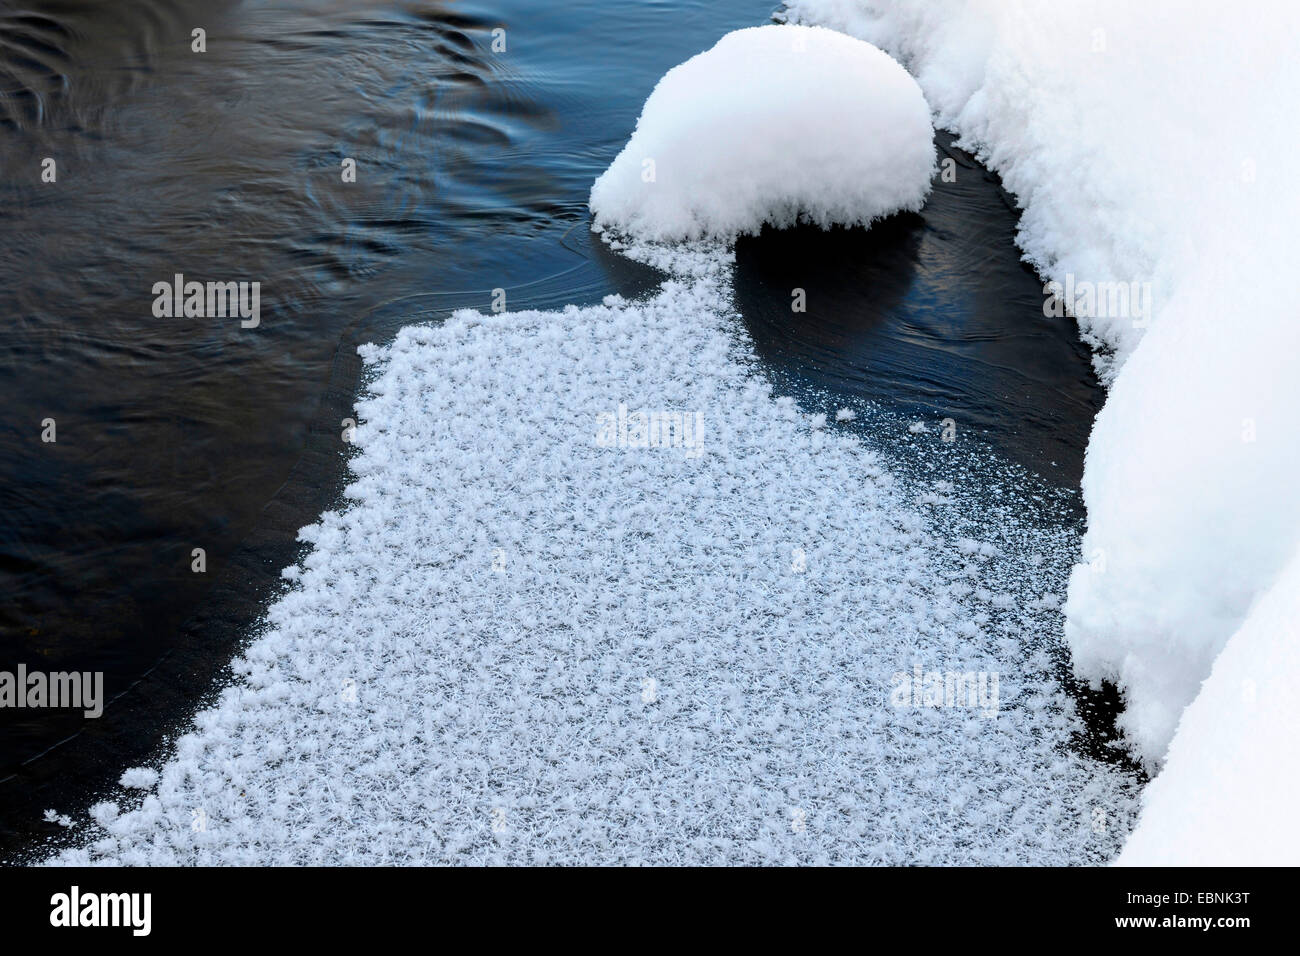 creek beginning to freeze up at -30░, building ice crystals, Finland, Kuusamo Stock Photo